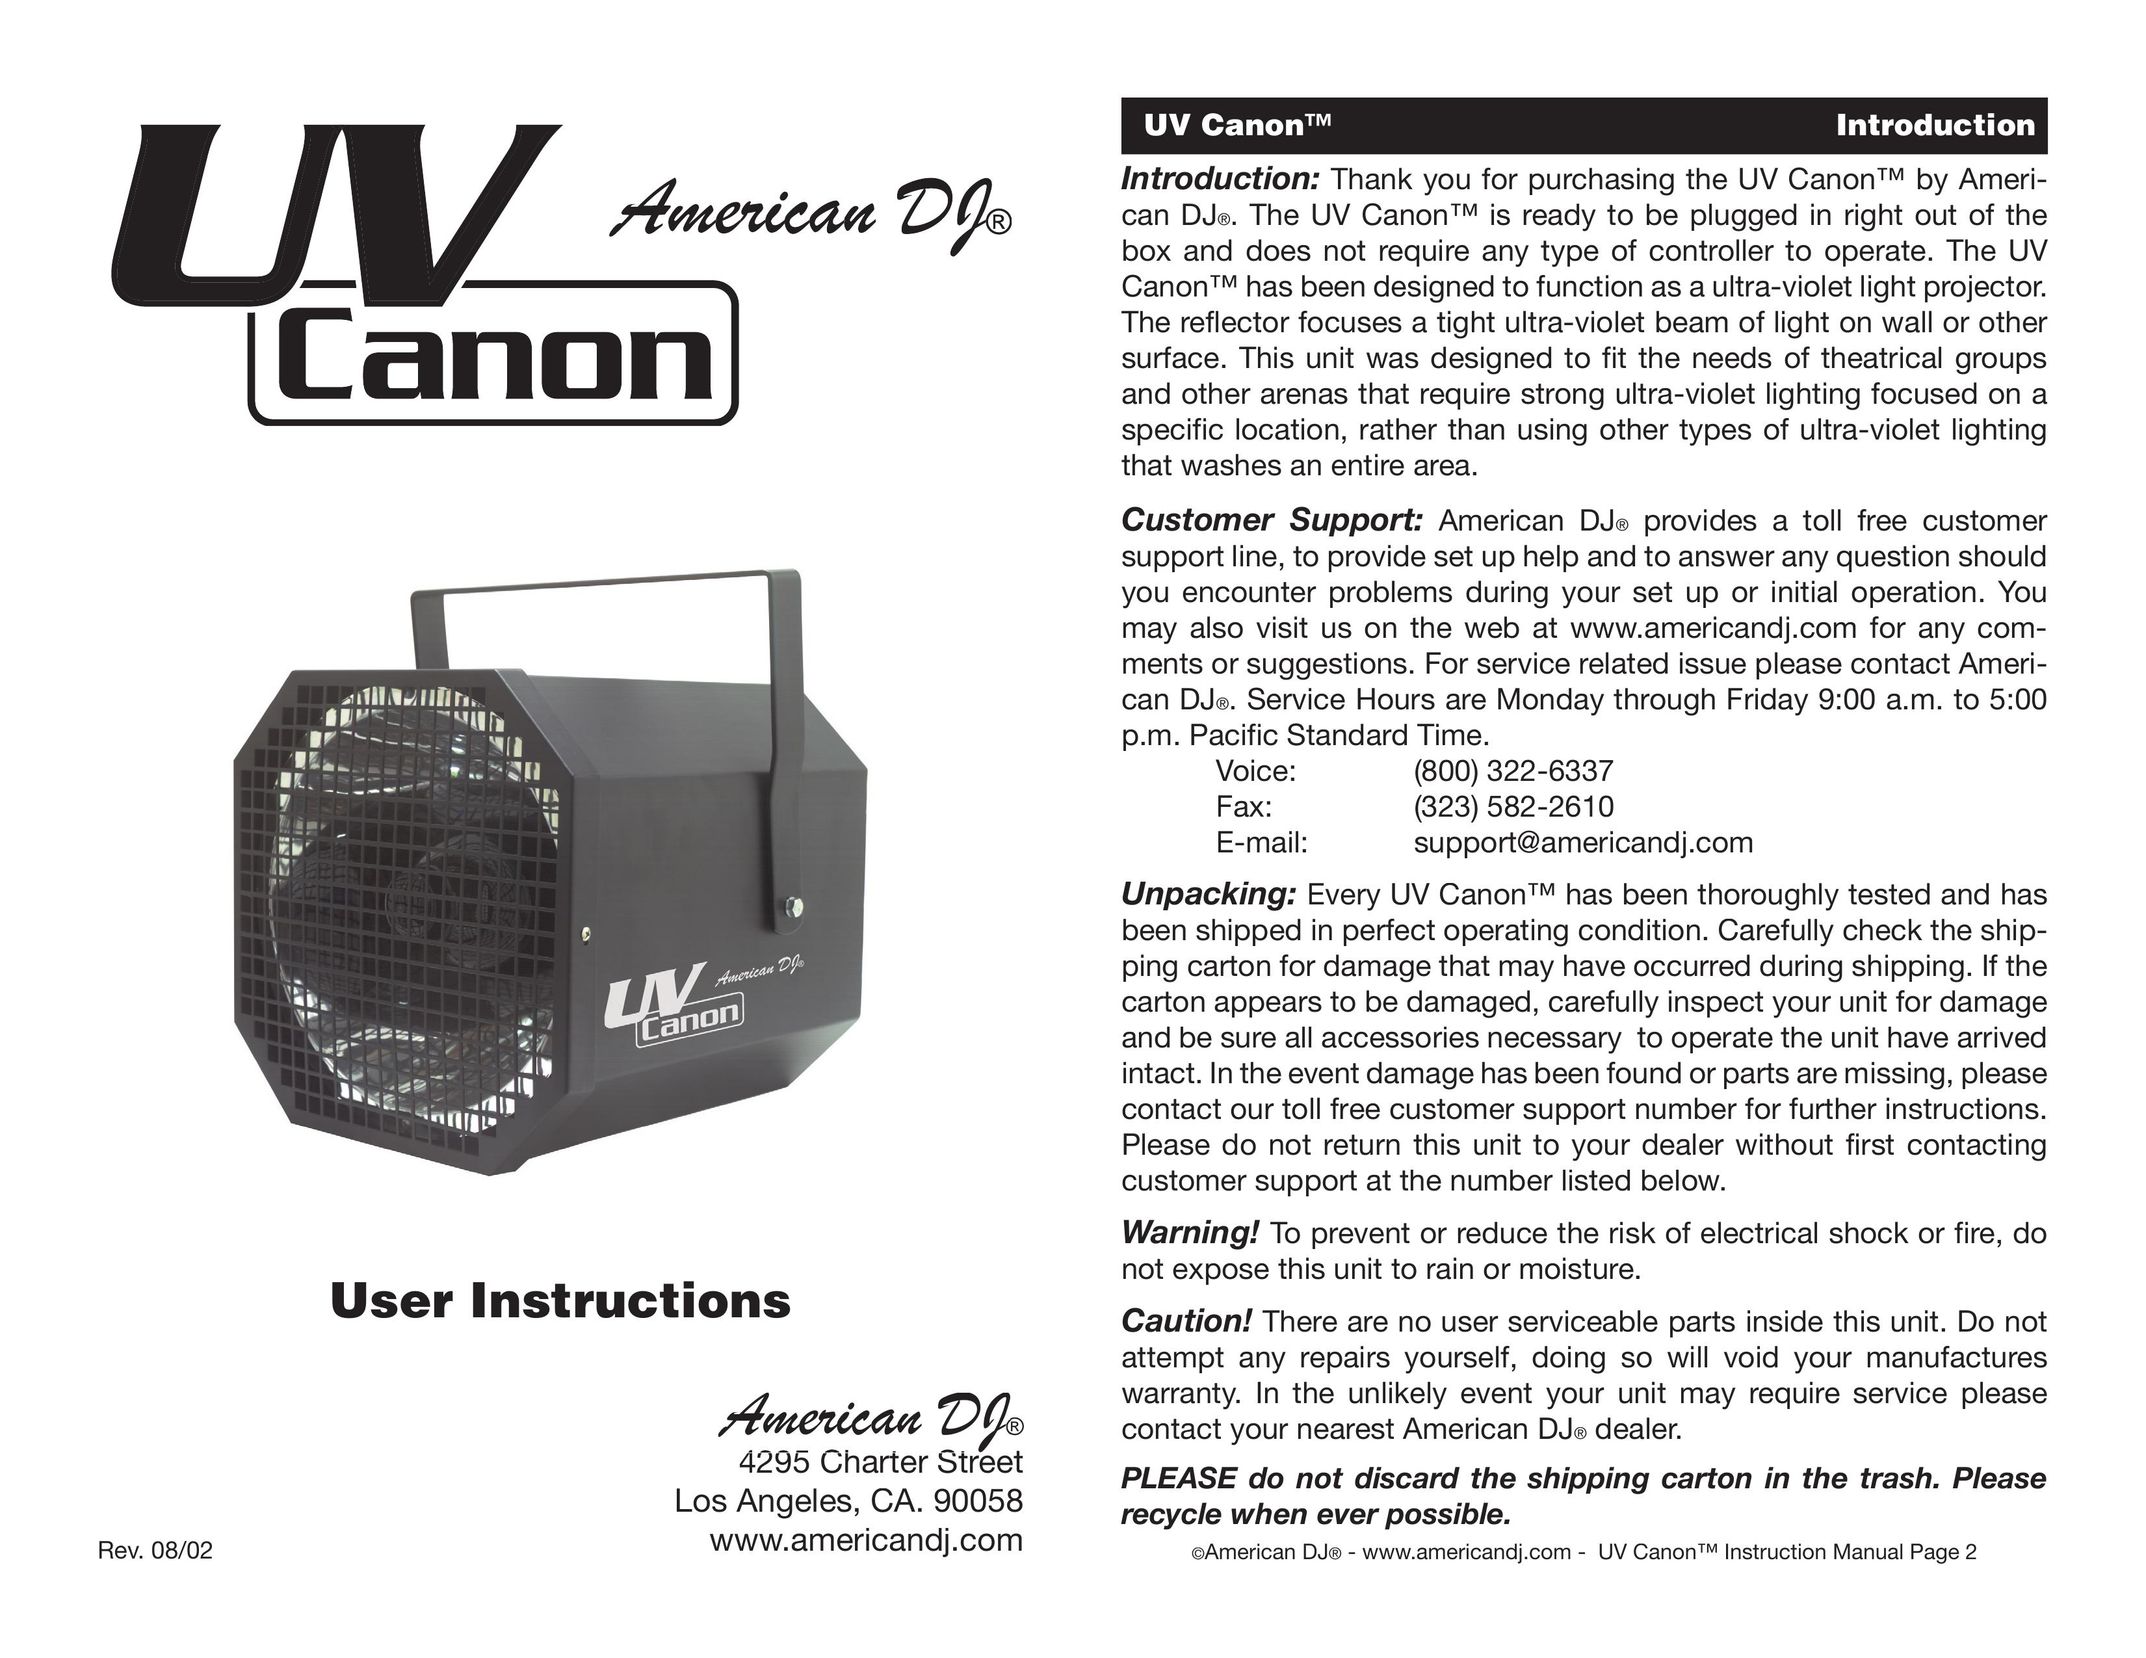 American DJ UV Canon Indoor Furnishings User Manual